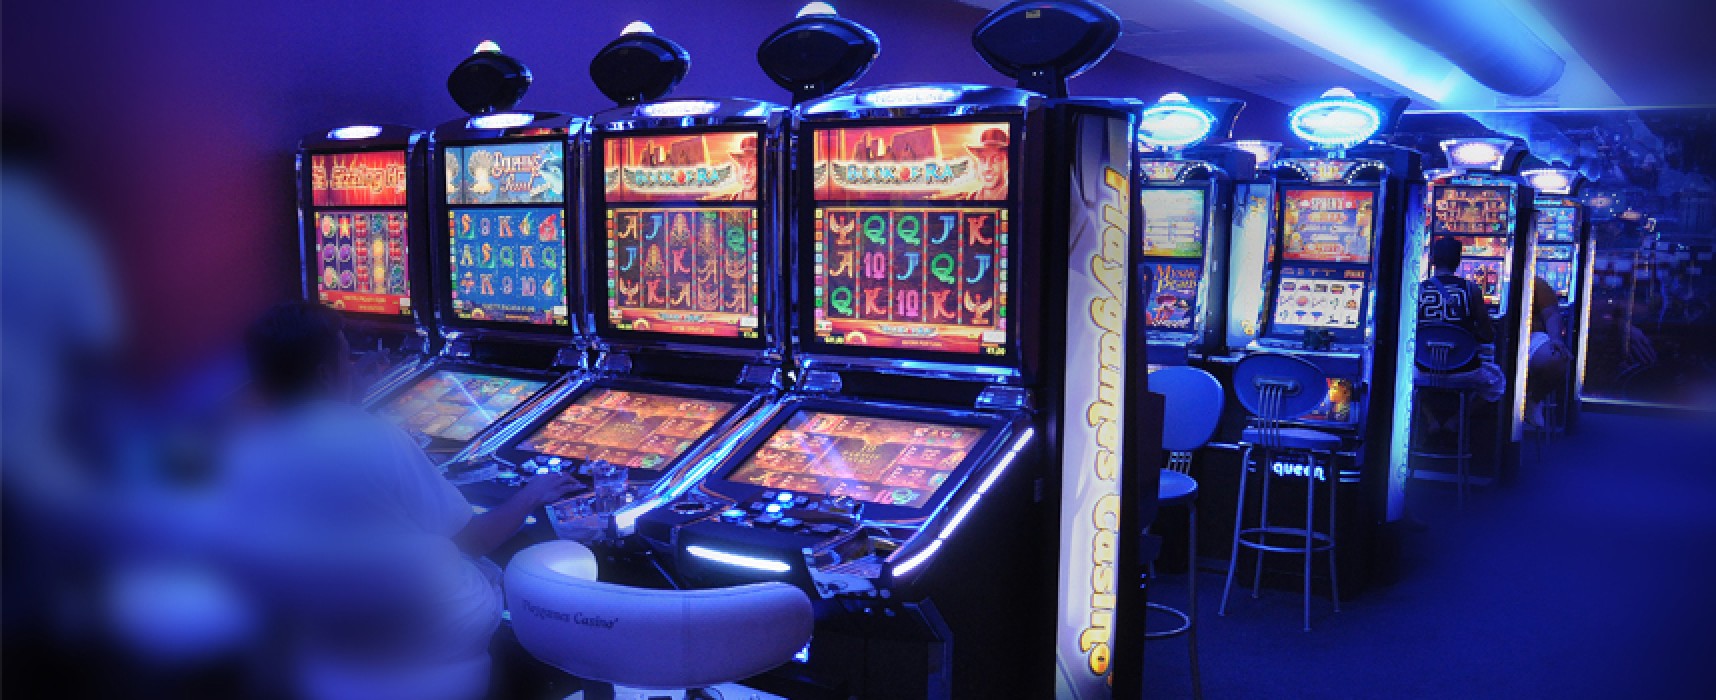 Carovana No Slot, la pastorale sociale biscegliese dice no al gioco d’azzardo